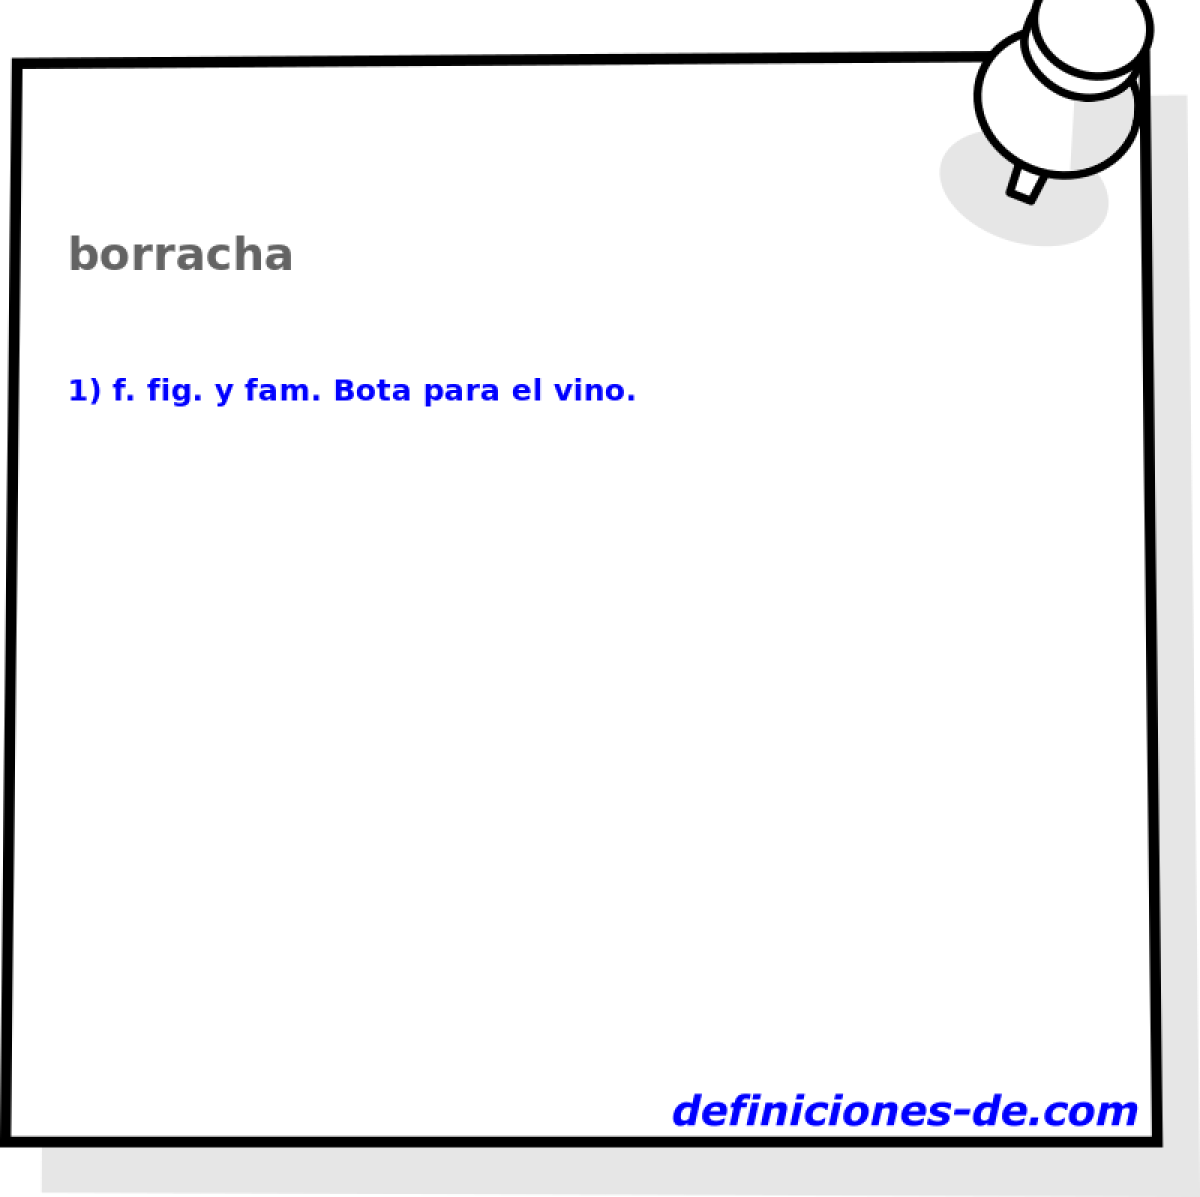 borracha 